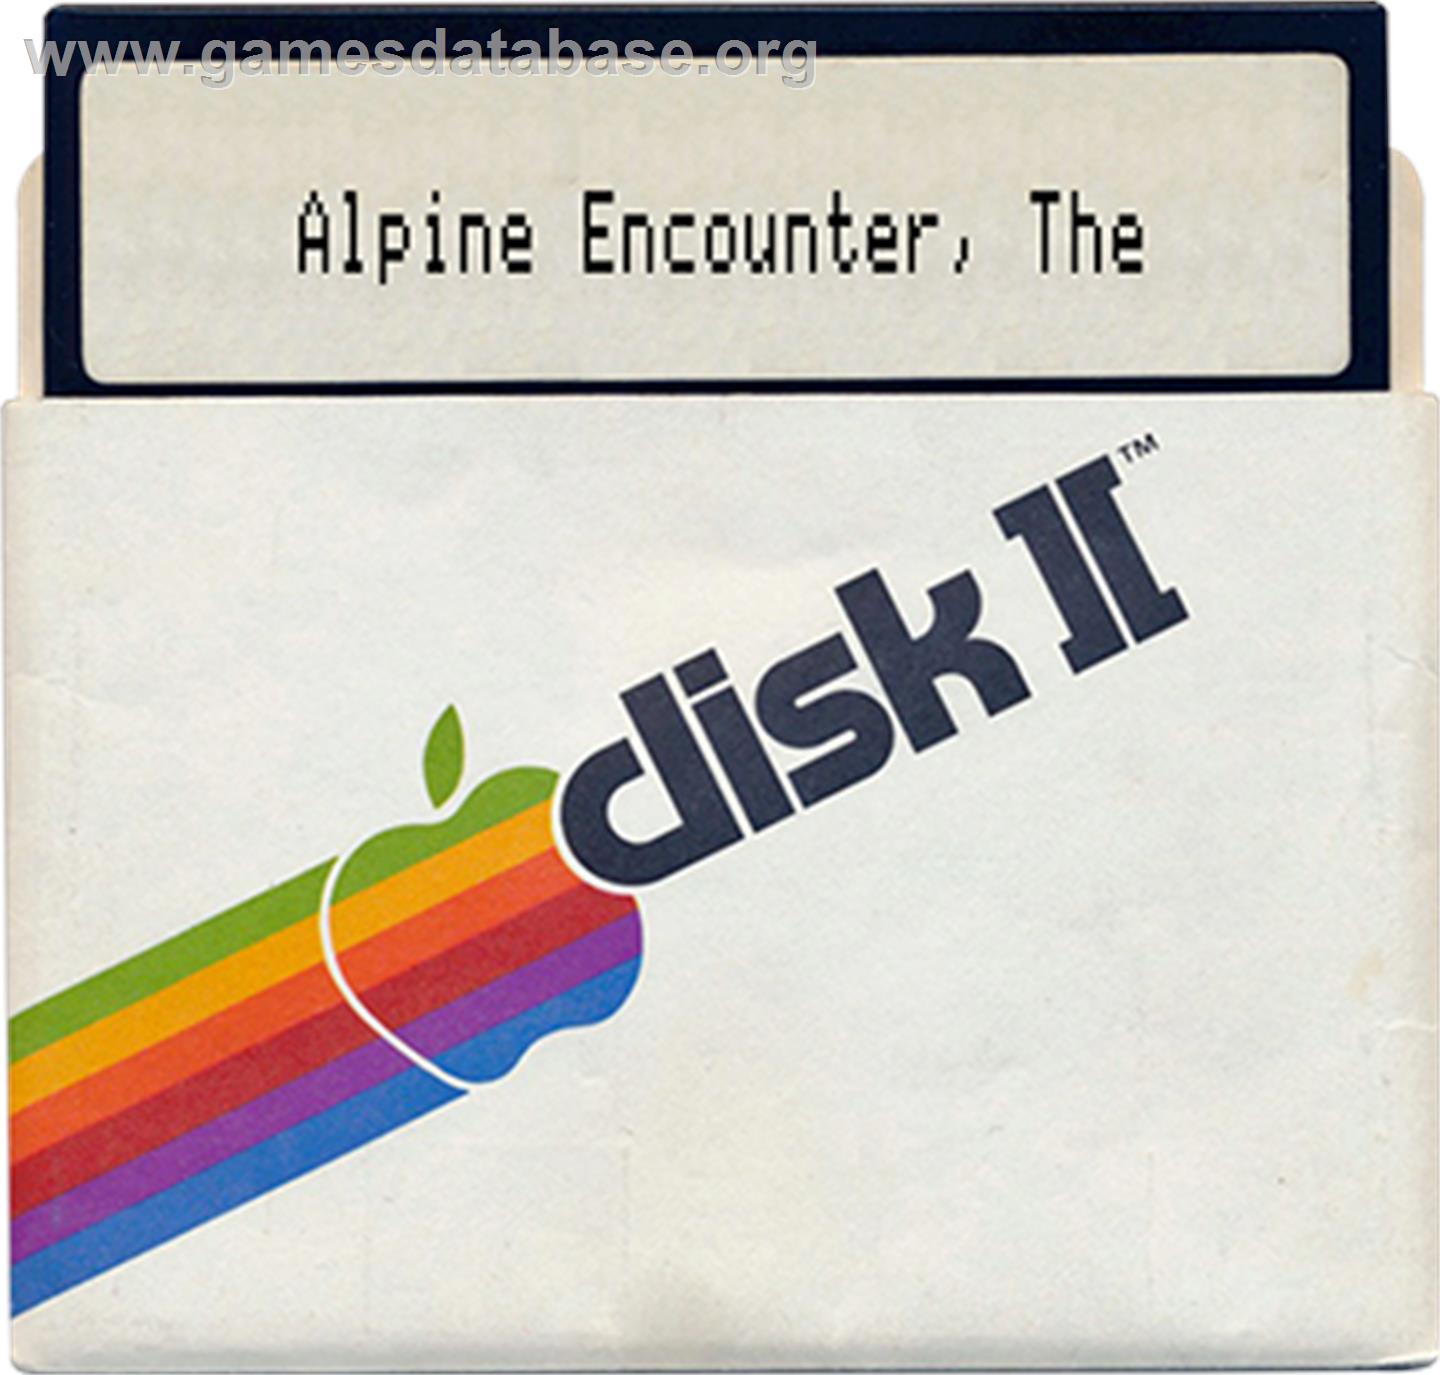 The Alpine Encounter - Apple II - Artwork - Disc